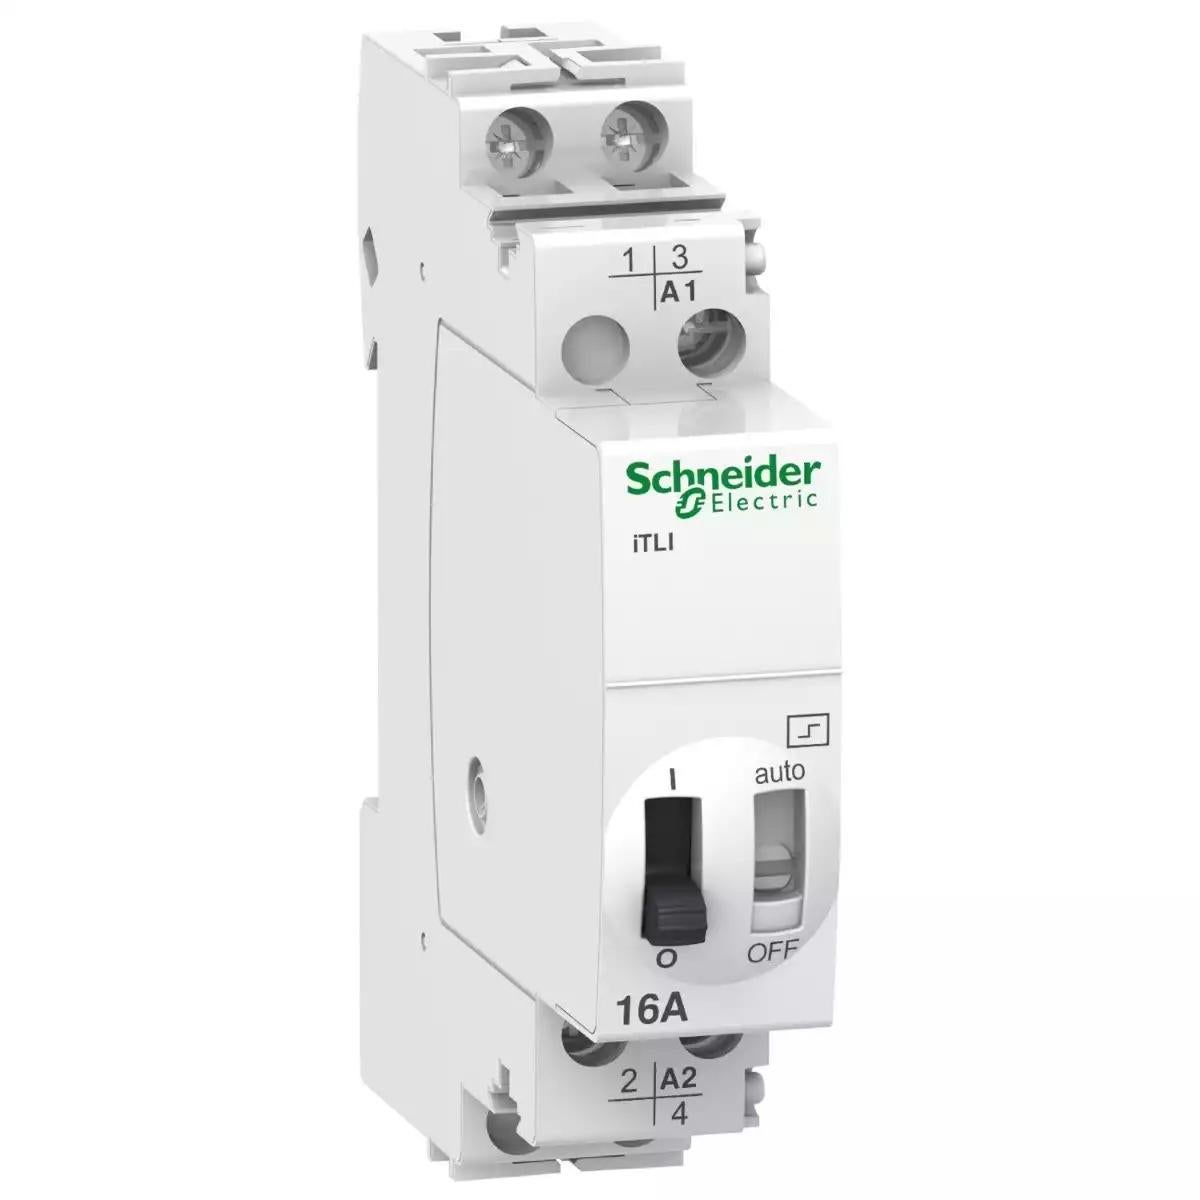 Schneider Electric Acti 9 iTL impulse relay iTLI - 2P - 1NO+1NC - 16A - coil 12 VDC - 24 VAC 50/60Hz